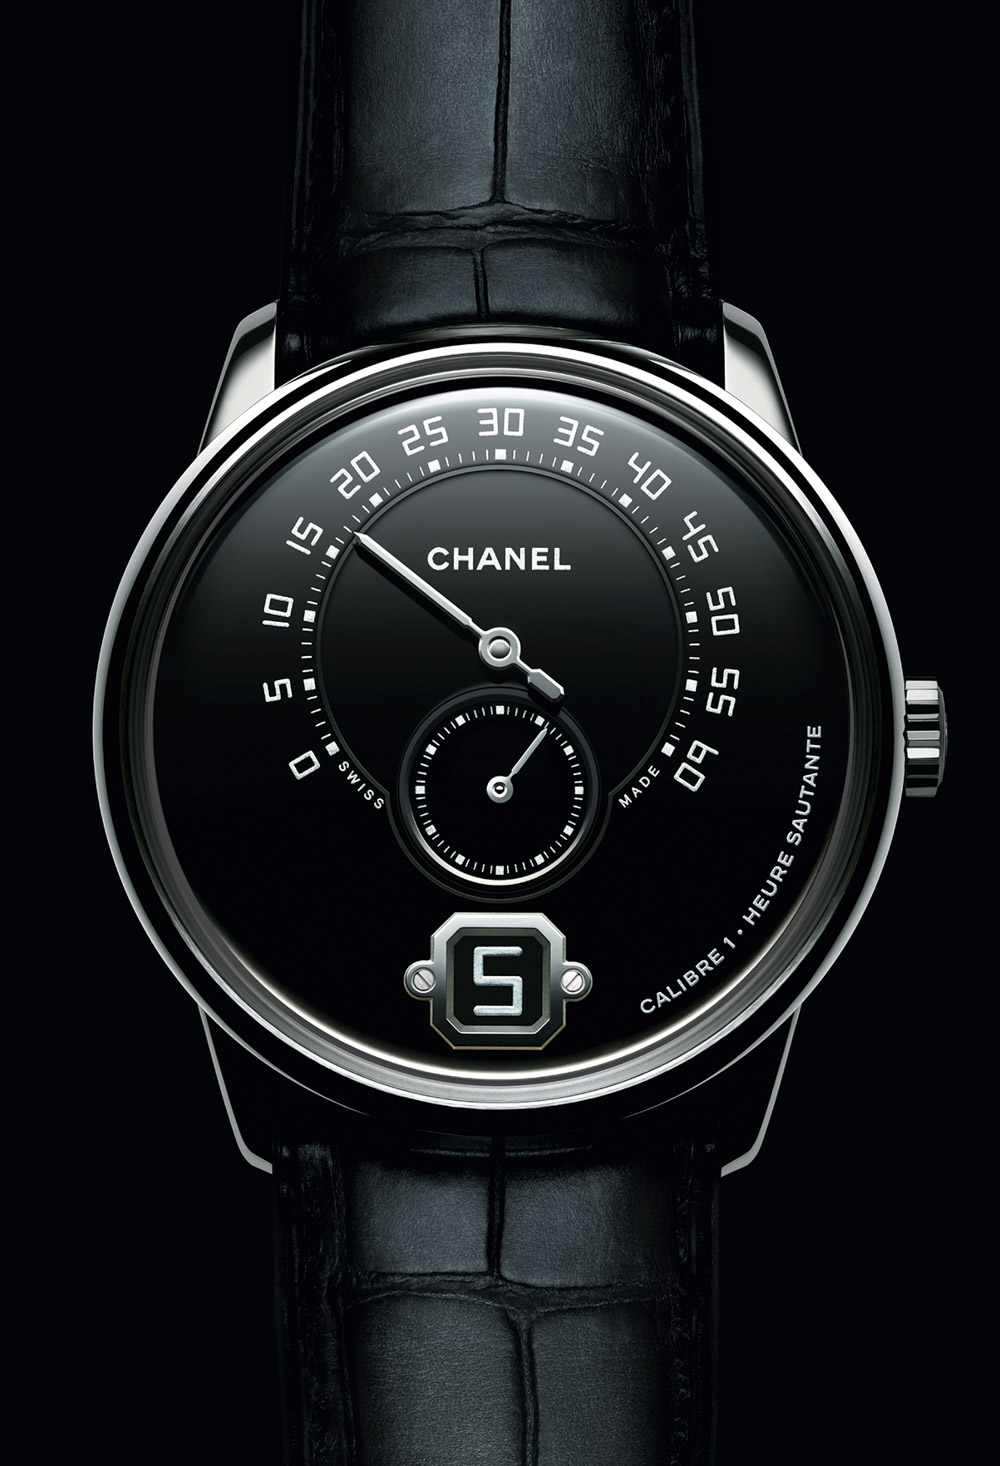 Monsieur De Chanel Watch For Men Now In Platinum For 2017 | aBlogtoWatch